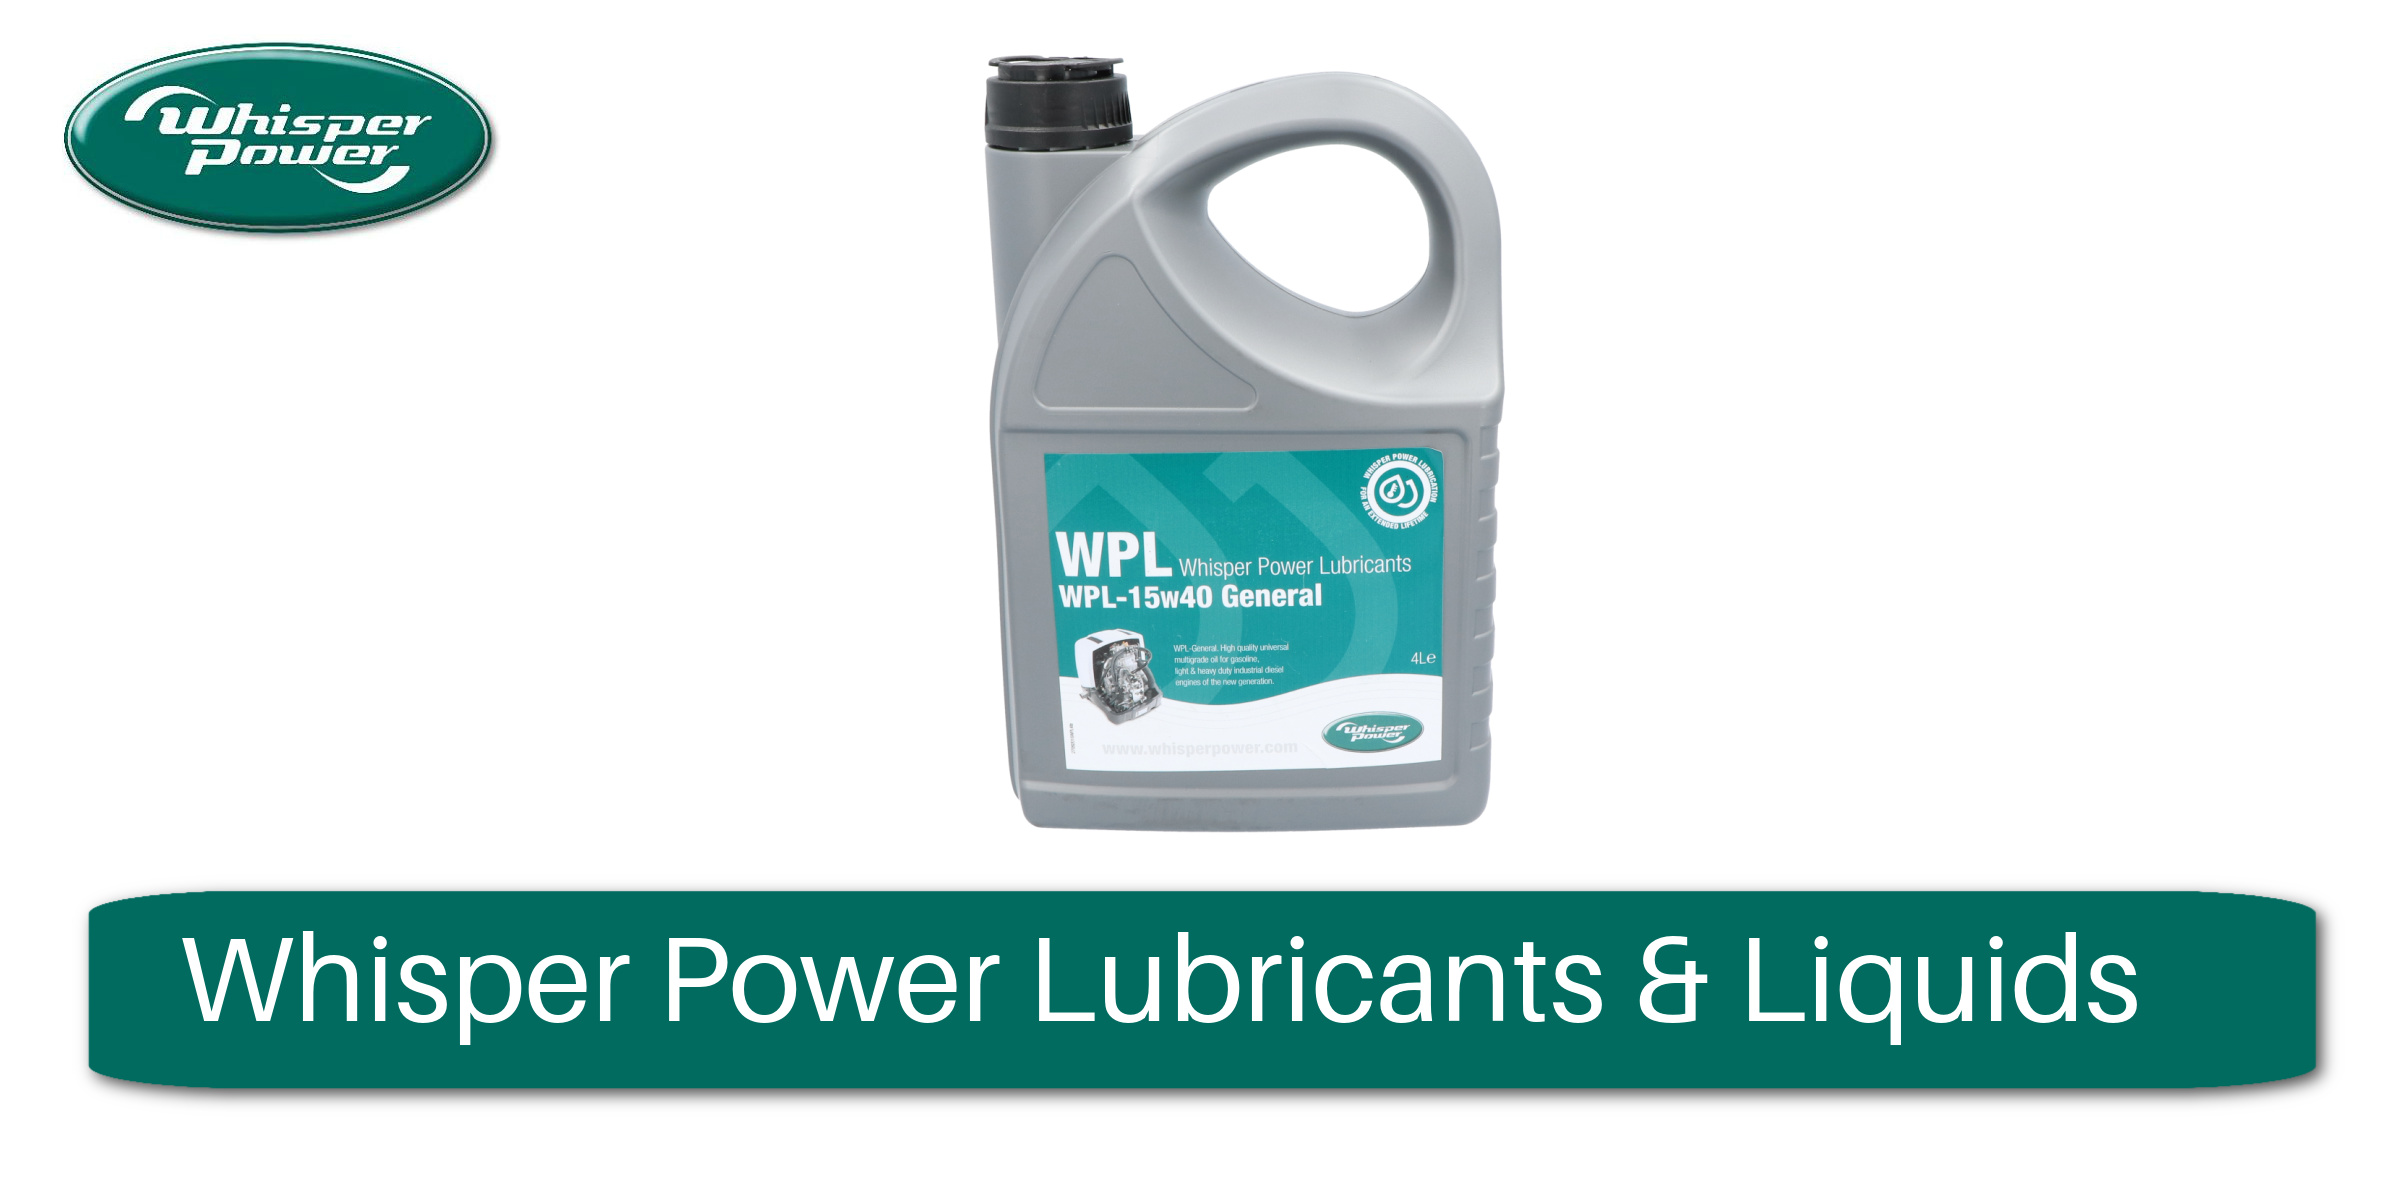 Whisper Power Lubricants & Liquids